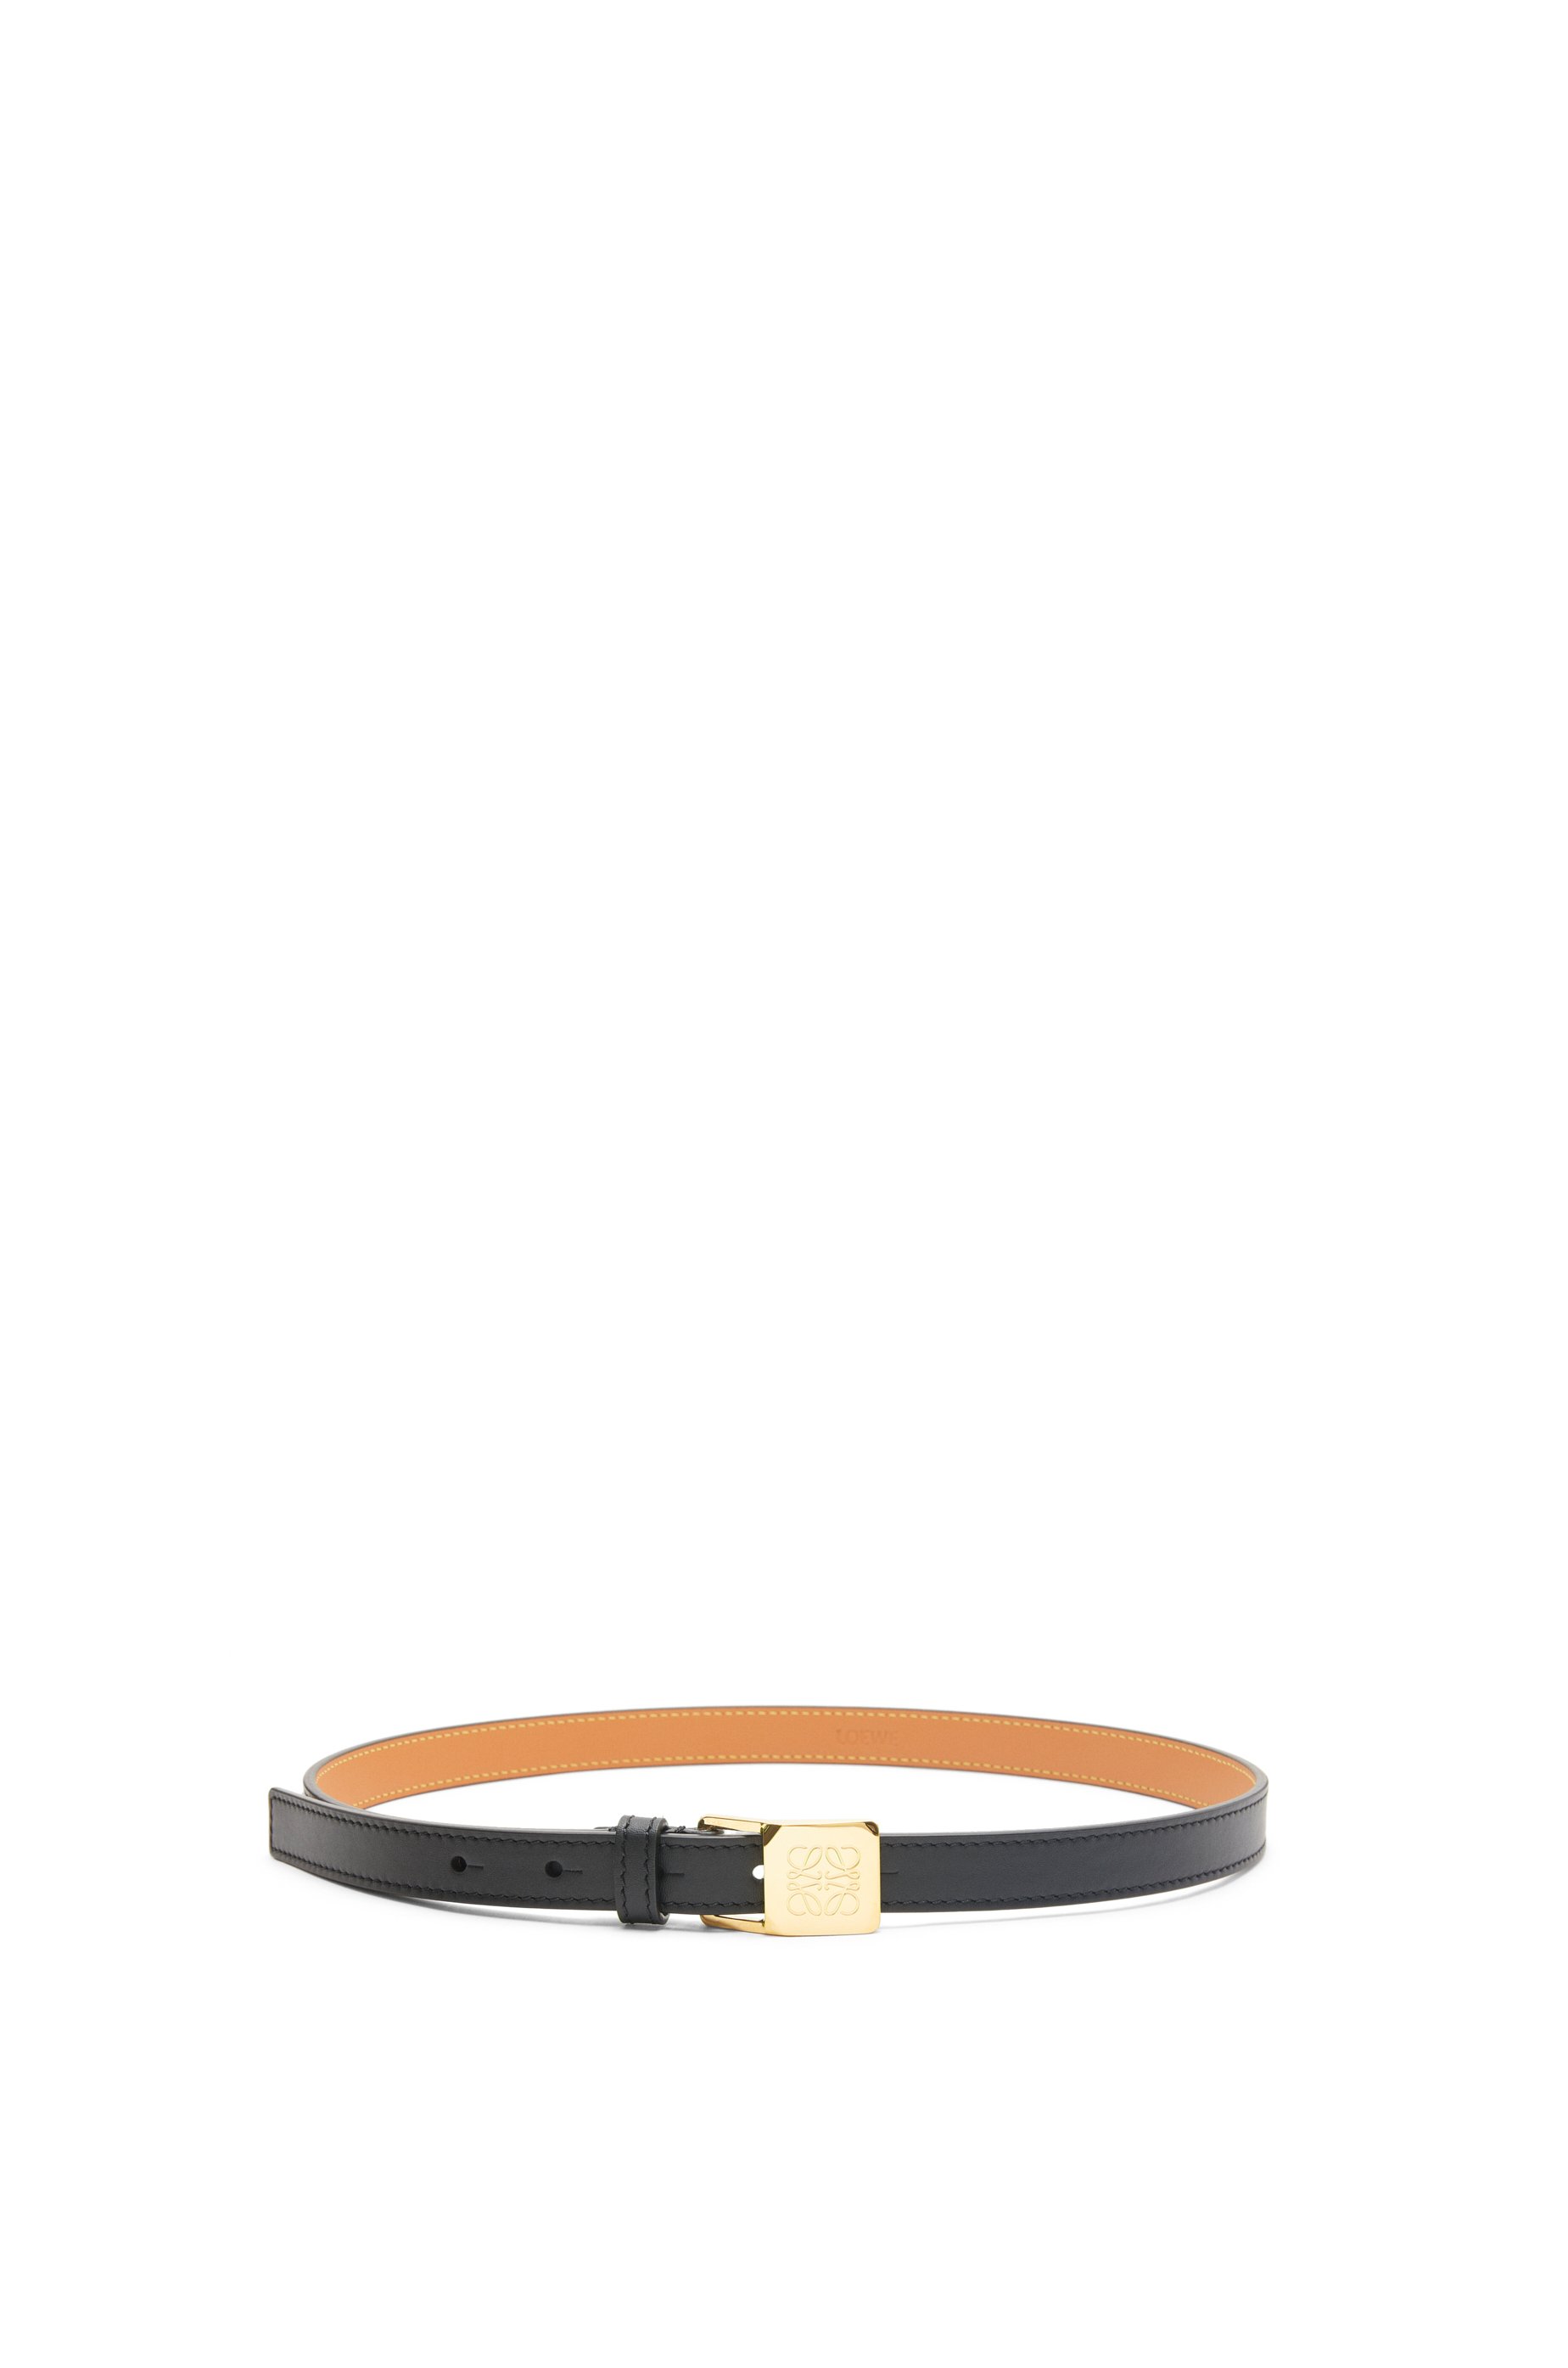 Amazona smooth - belt in Black/Gold padlock LOEWE calfskin